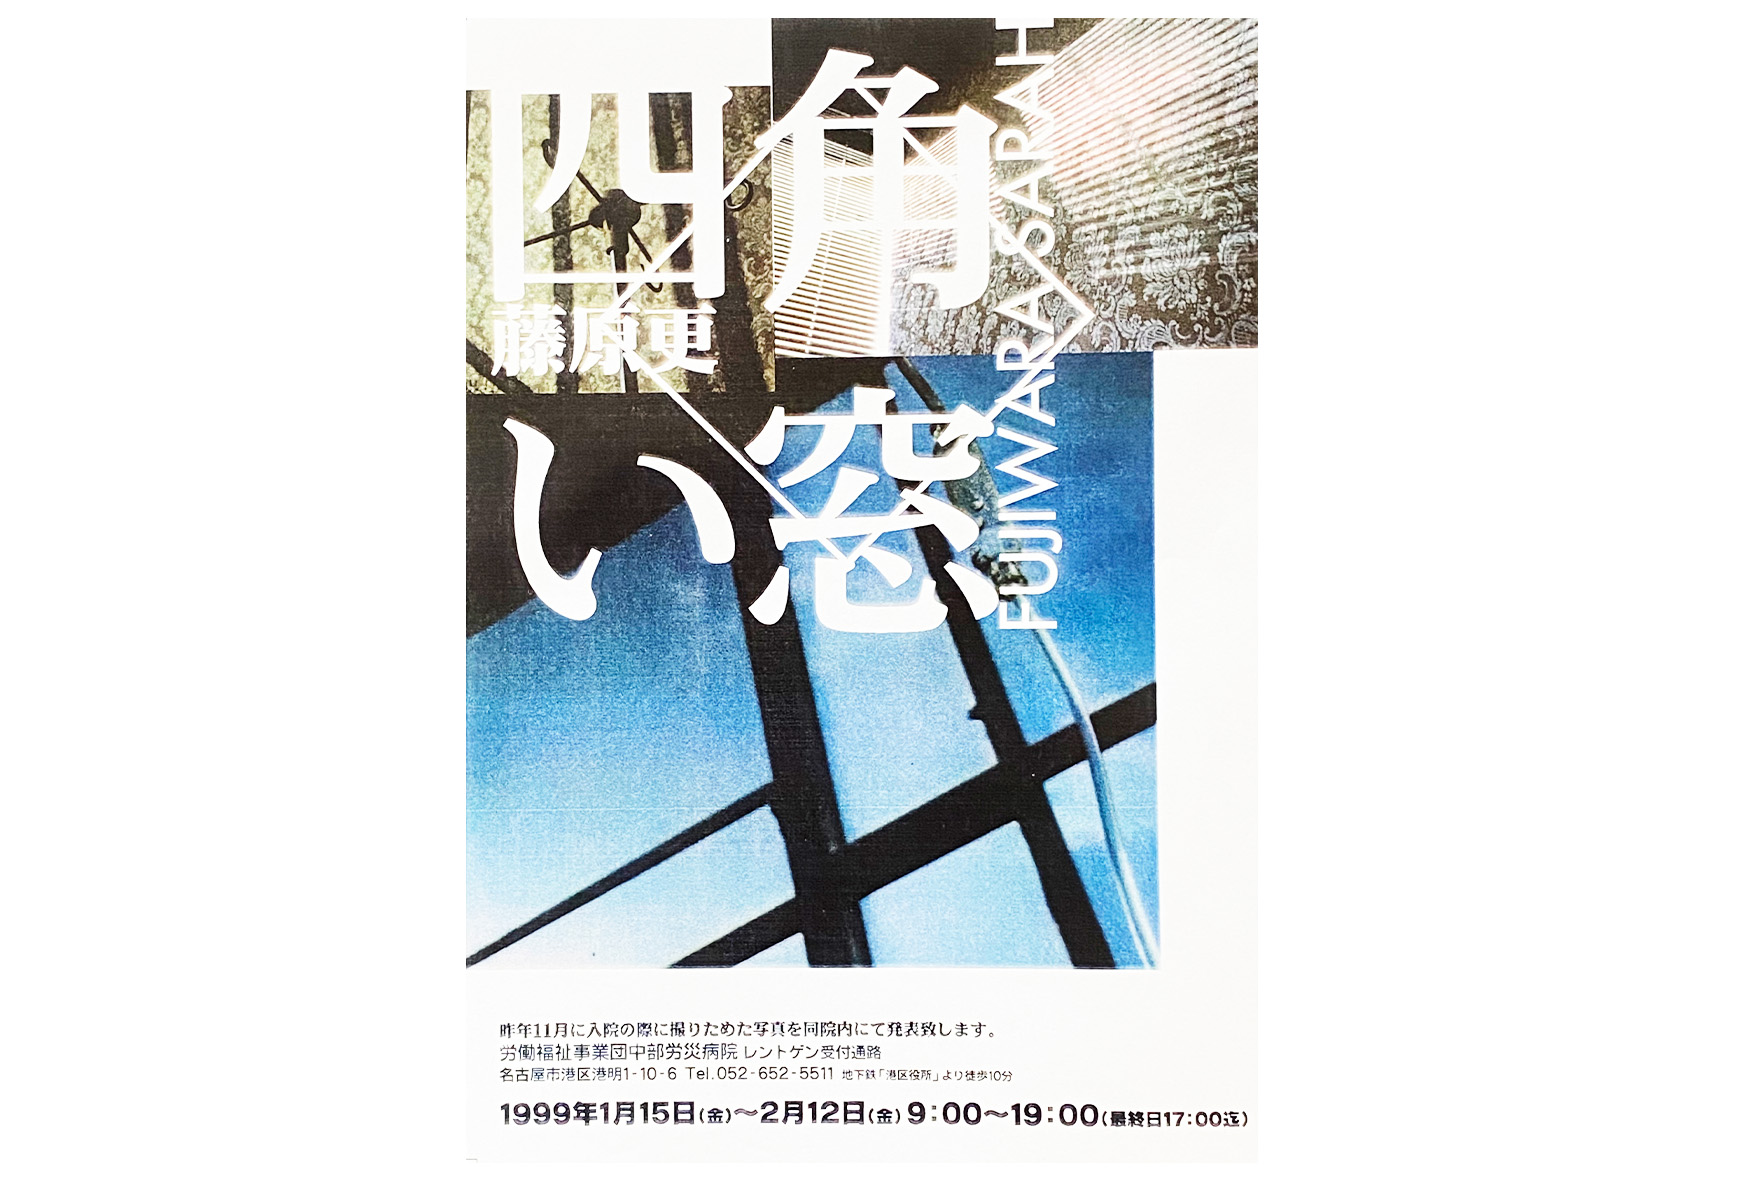 From the square window, Chubu rousai hospital Nagoya Japan, Jan.15-Feb.12, 1999, solo show